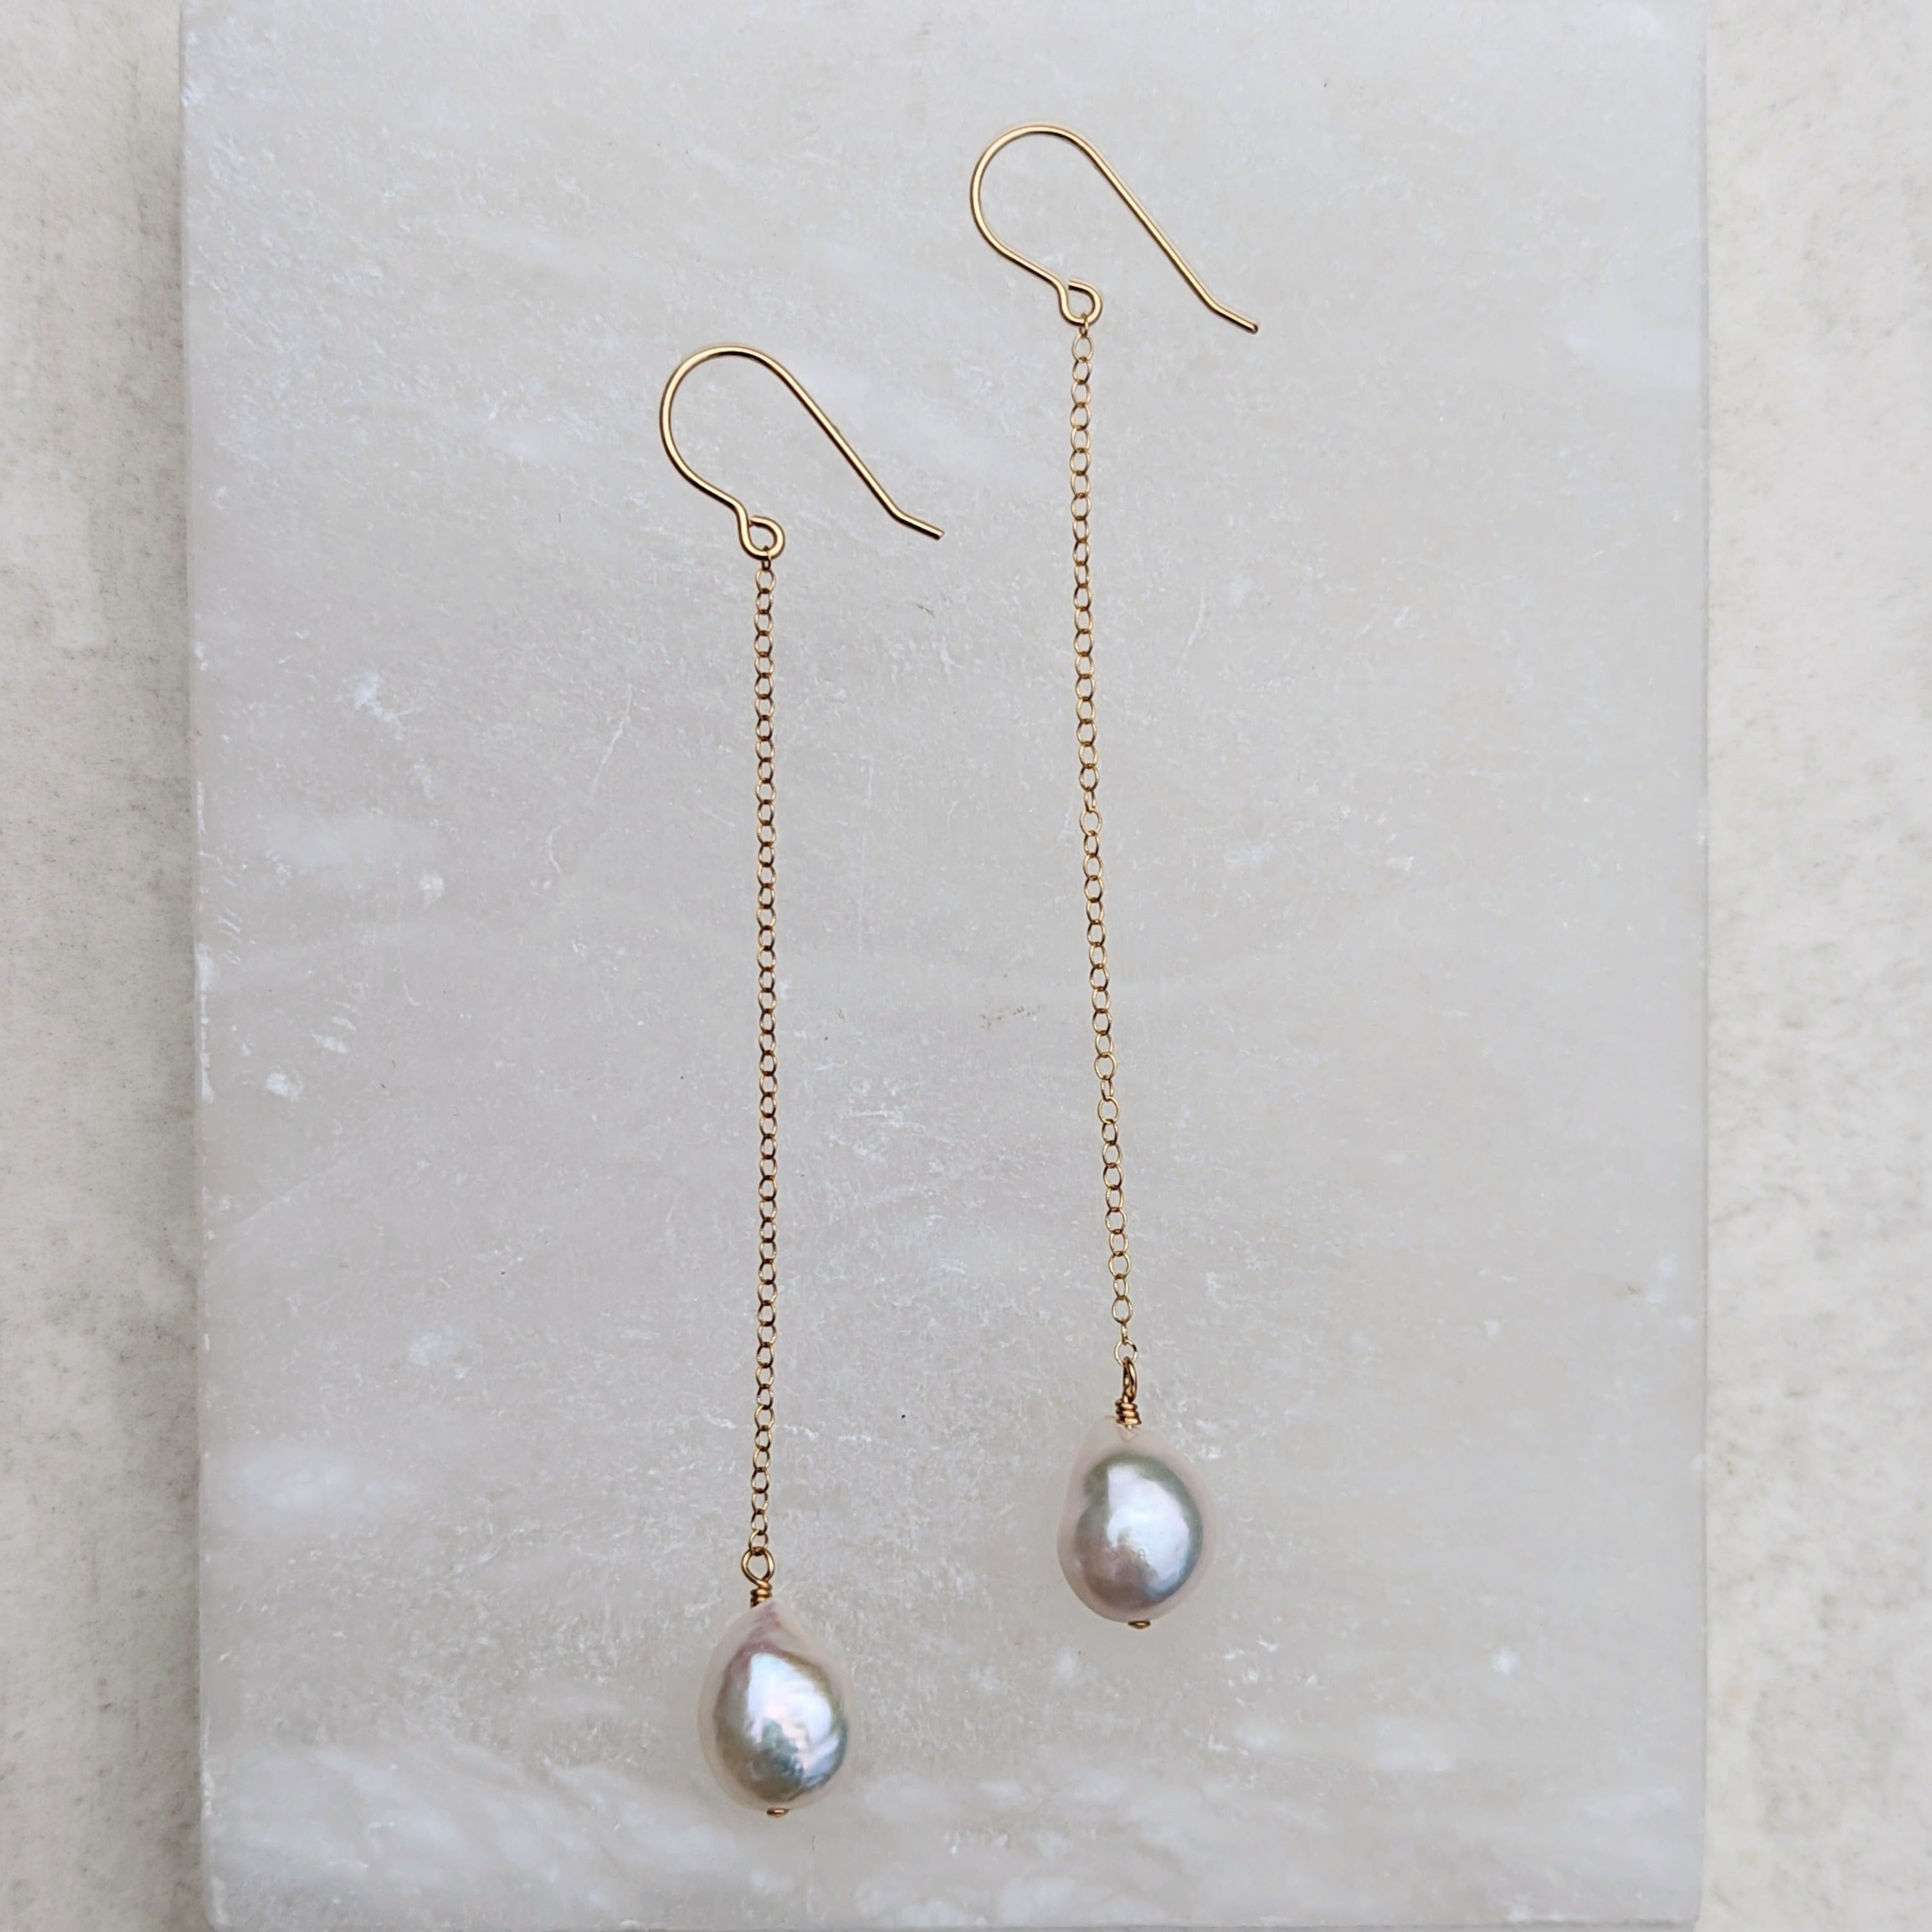 pair of long chain pearl earrings in gold